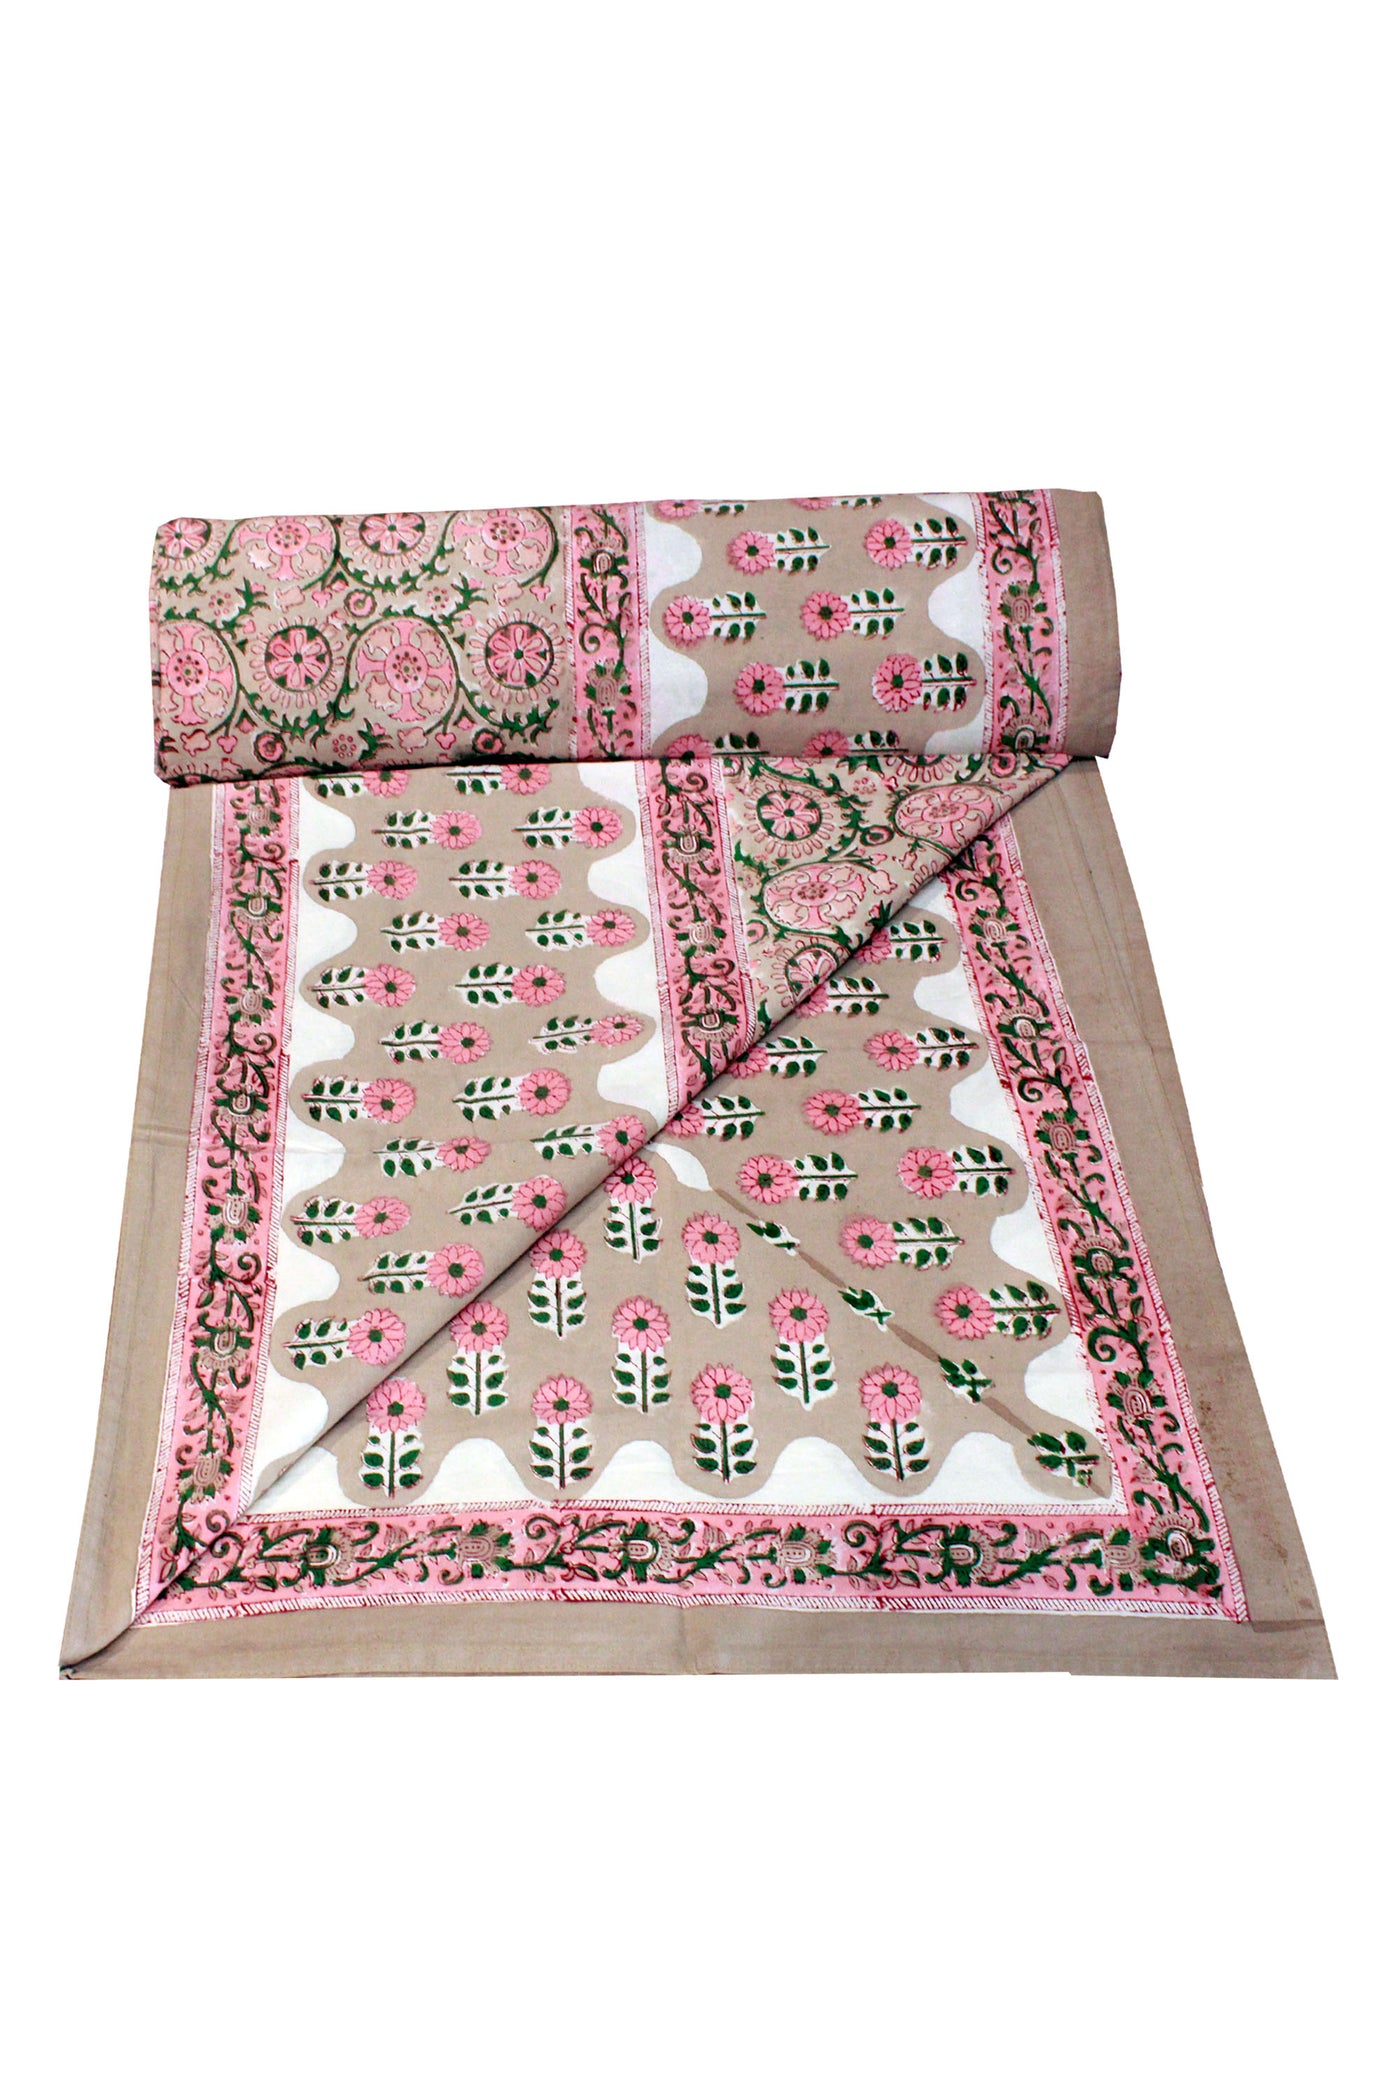 Cotton Gud Buti  Block Print Bedsheet in Cameo Rose